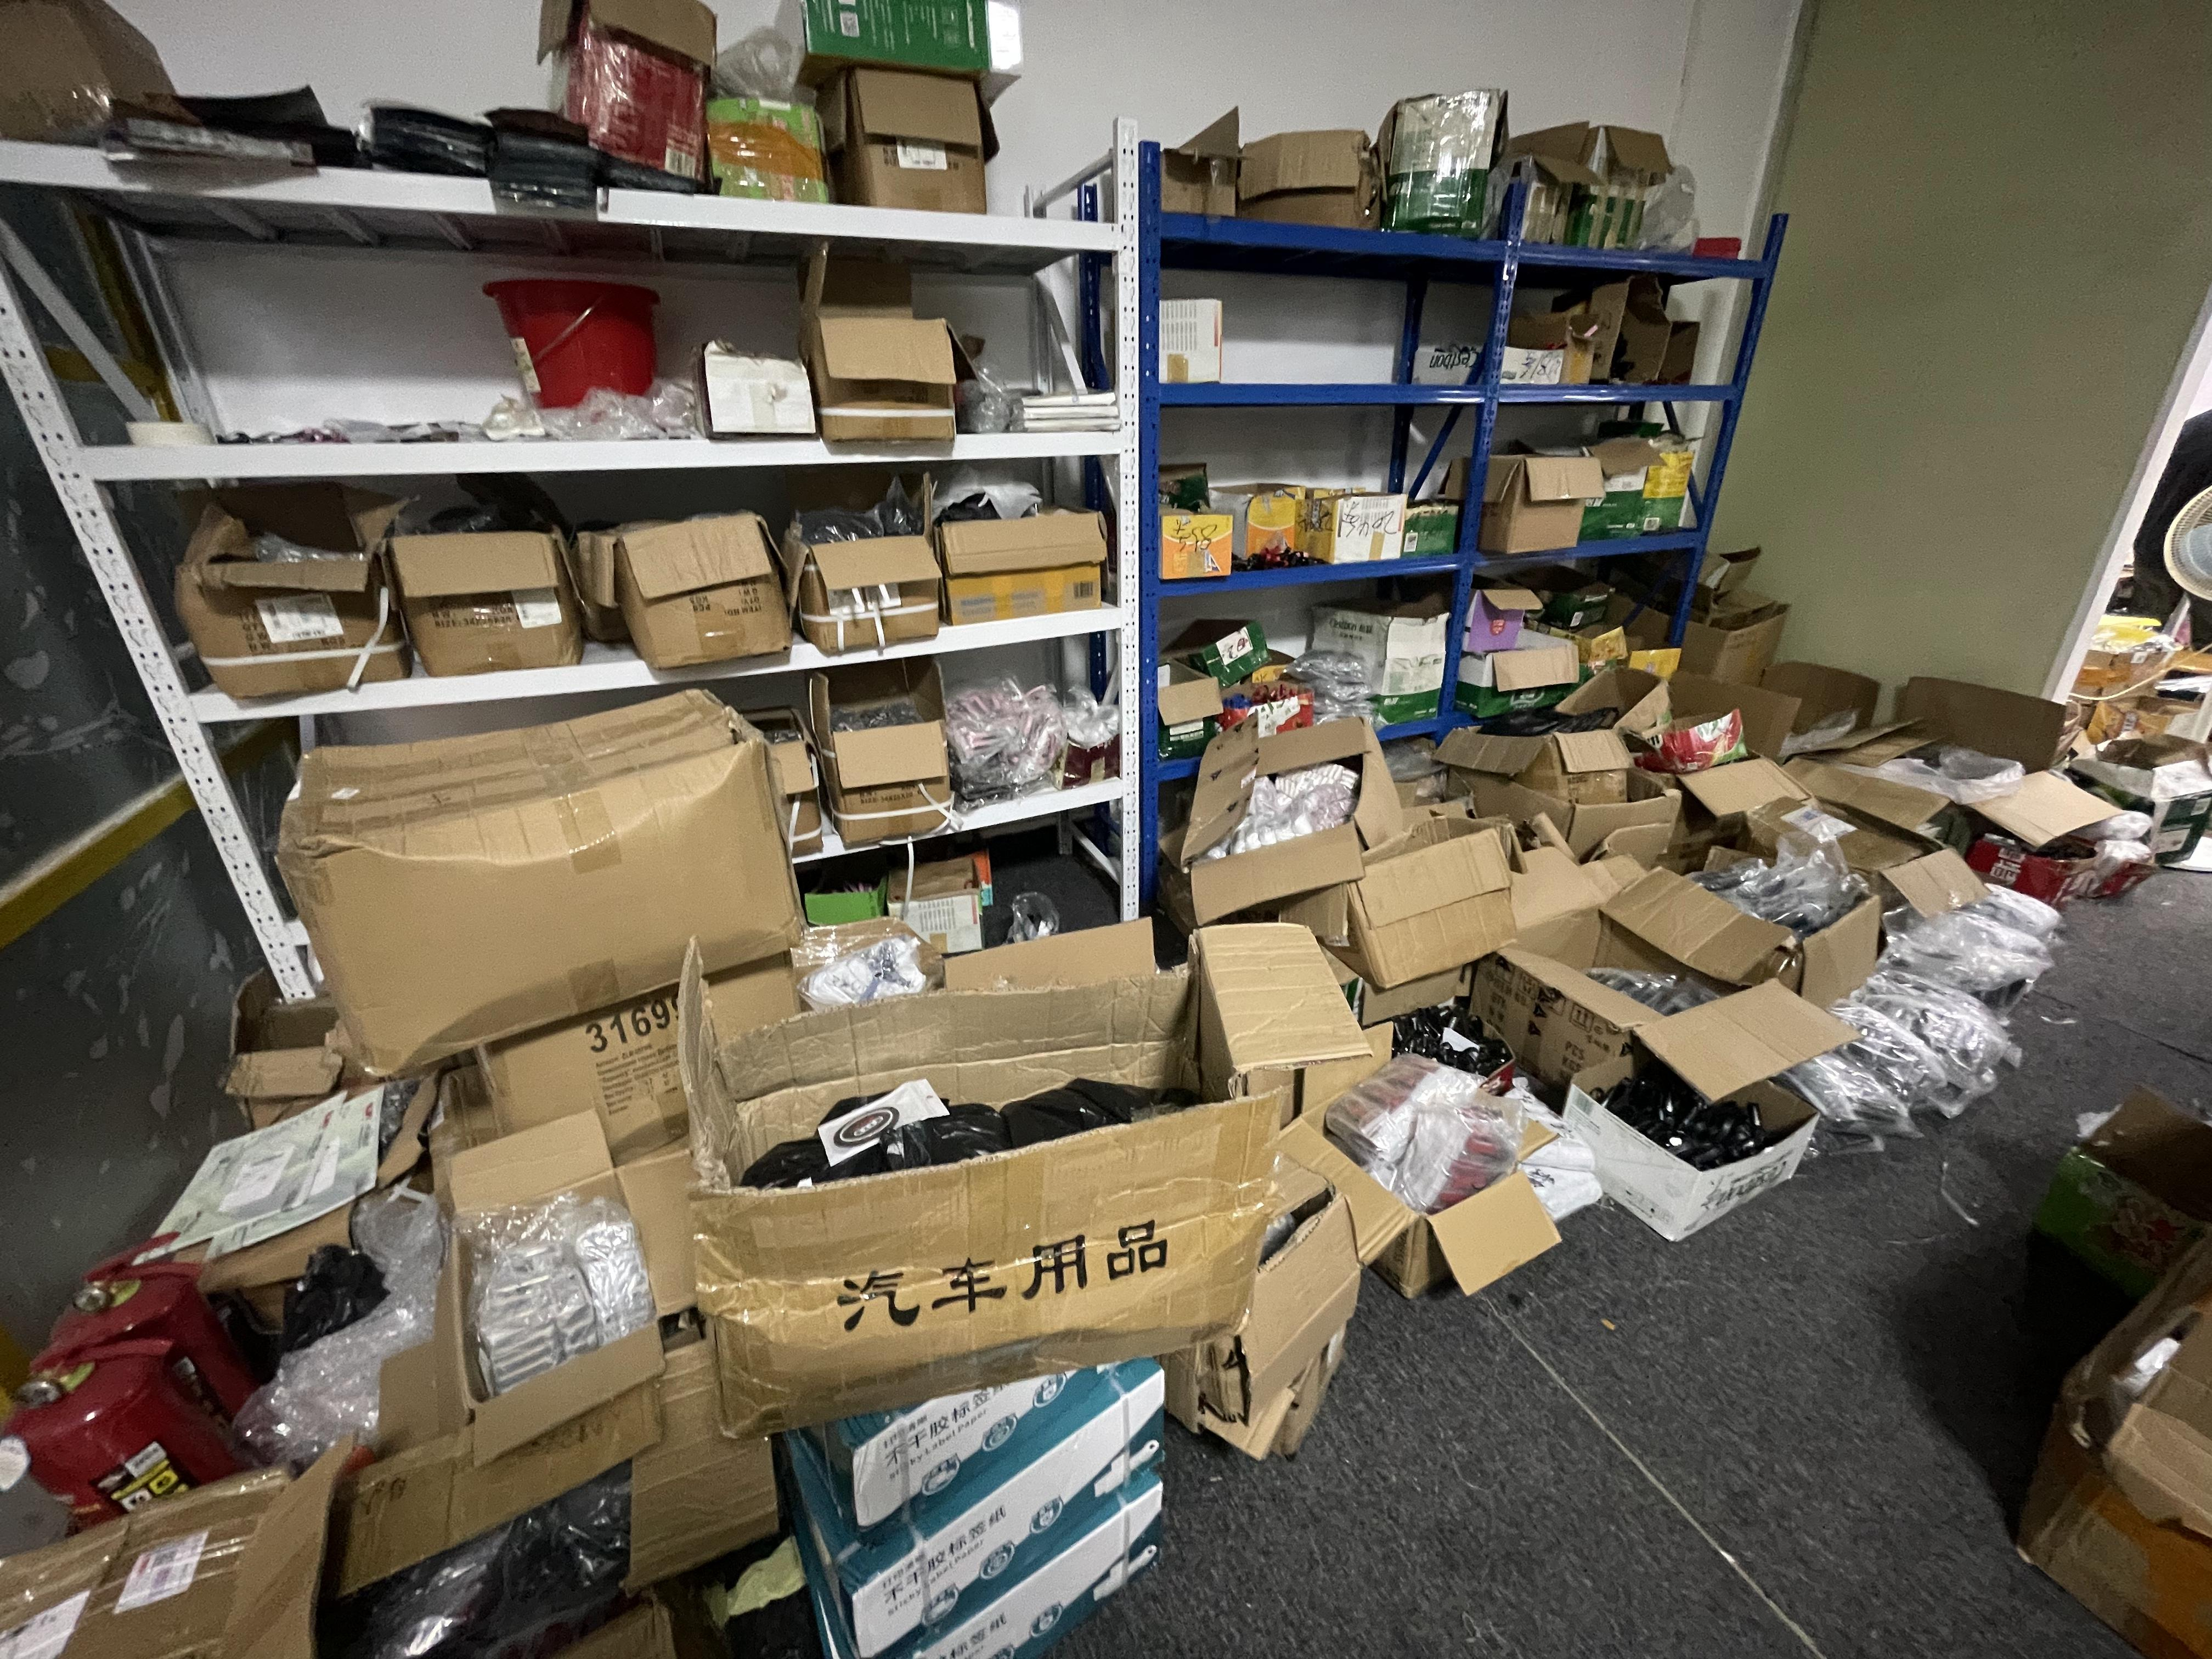 Chinese police destroy £21million of counterfeit designer goods